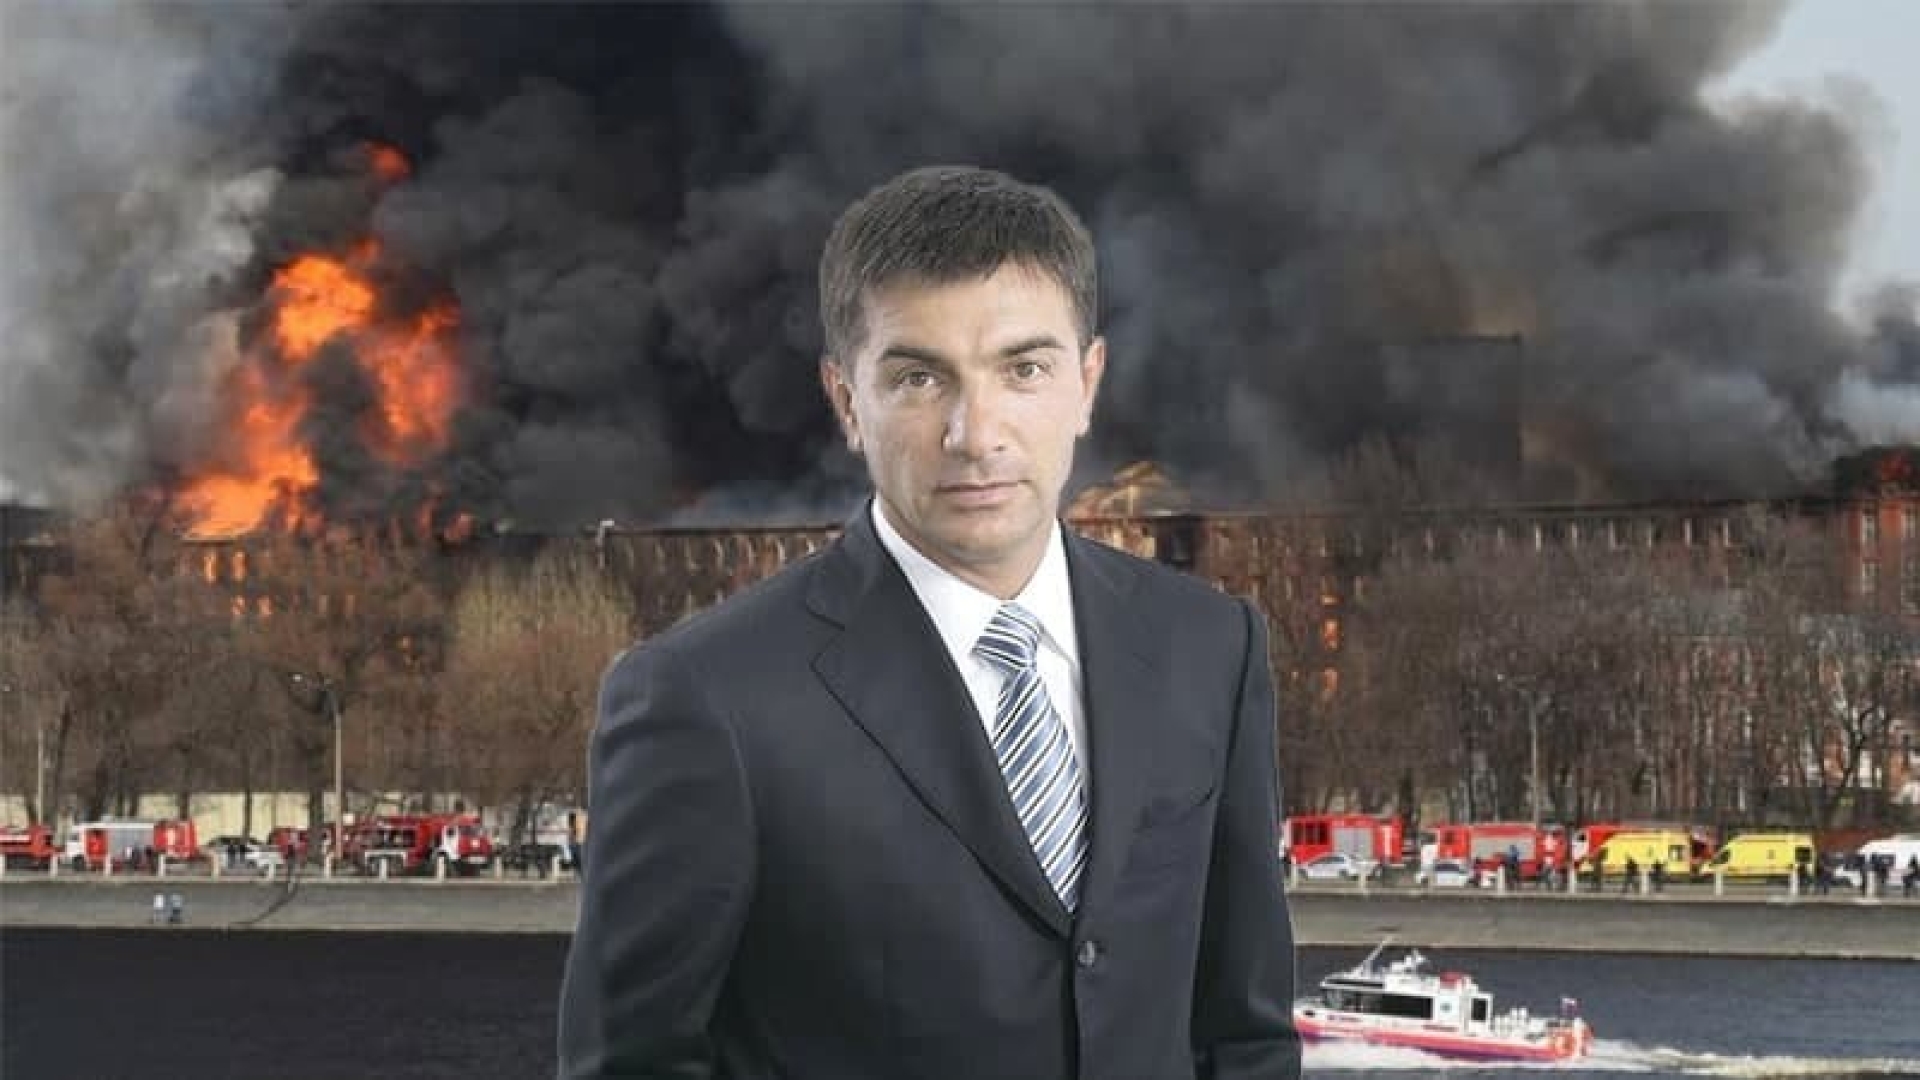 Will the factory heat Ustaev's pocket?